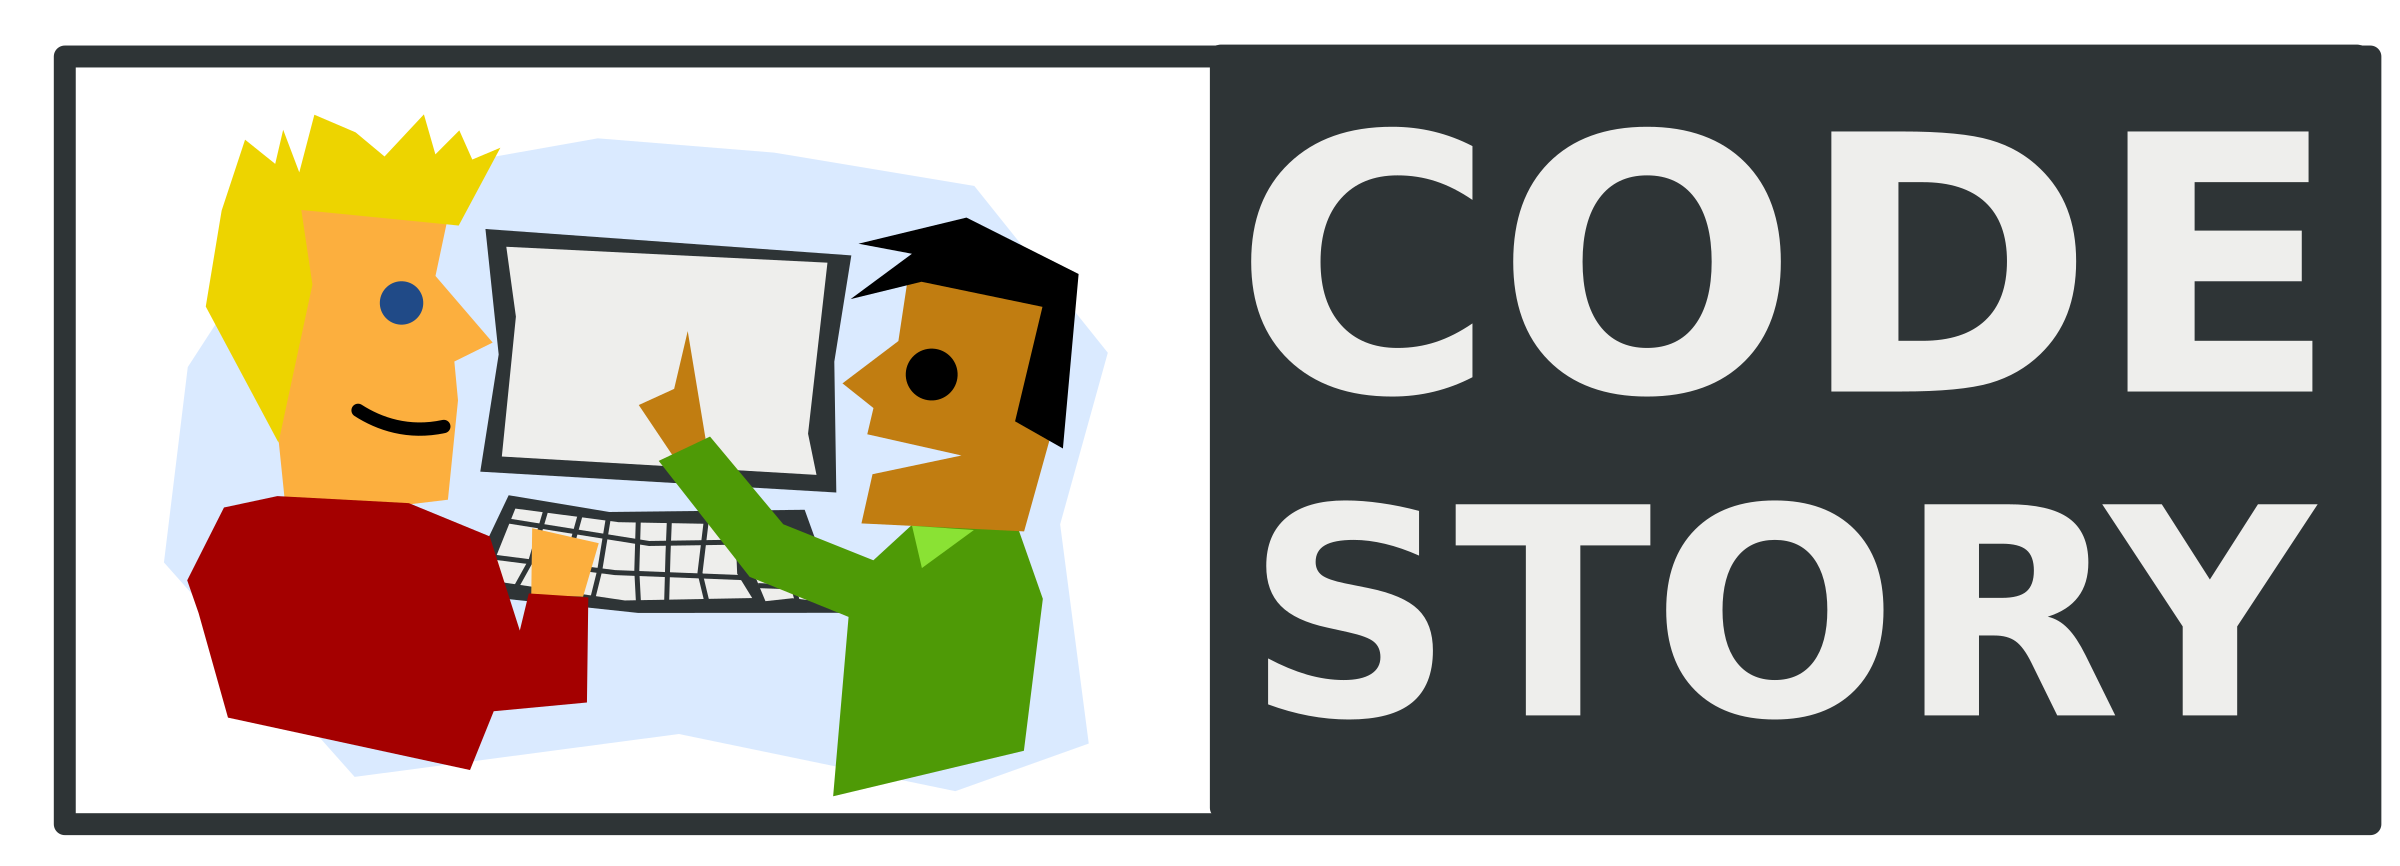 Code Story logo SVG Clip arts